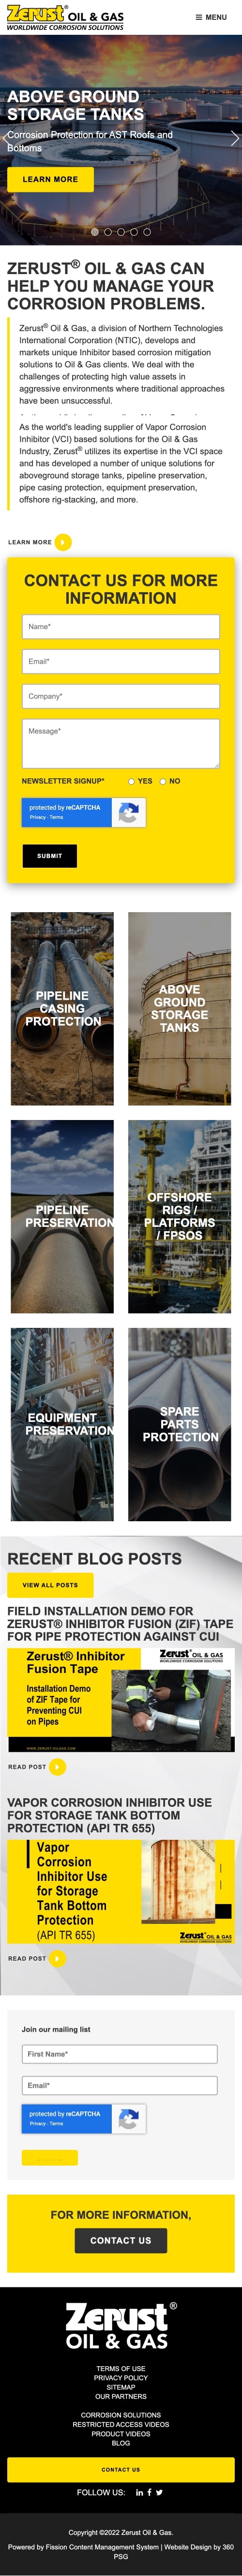 Zerust Oil & Gas Website - Mobile